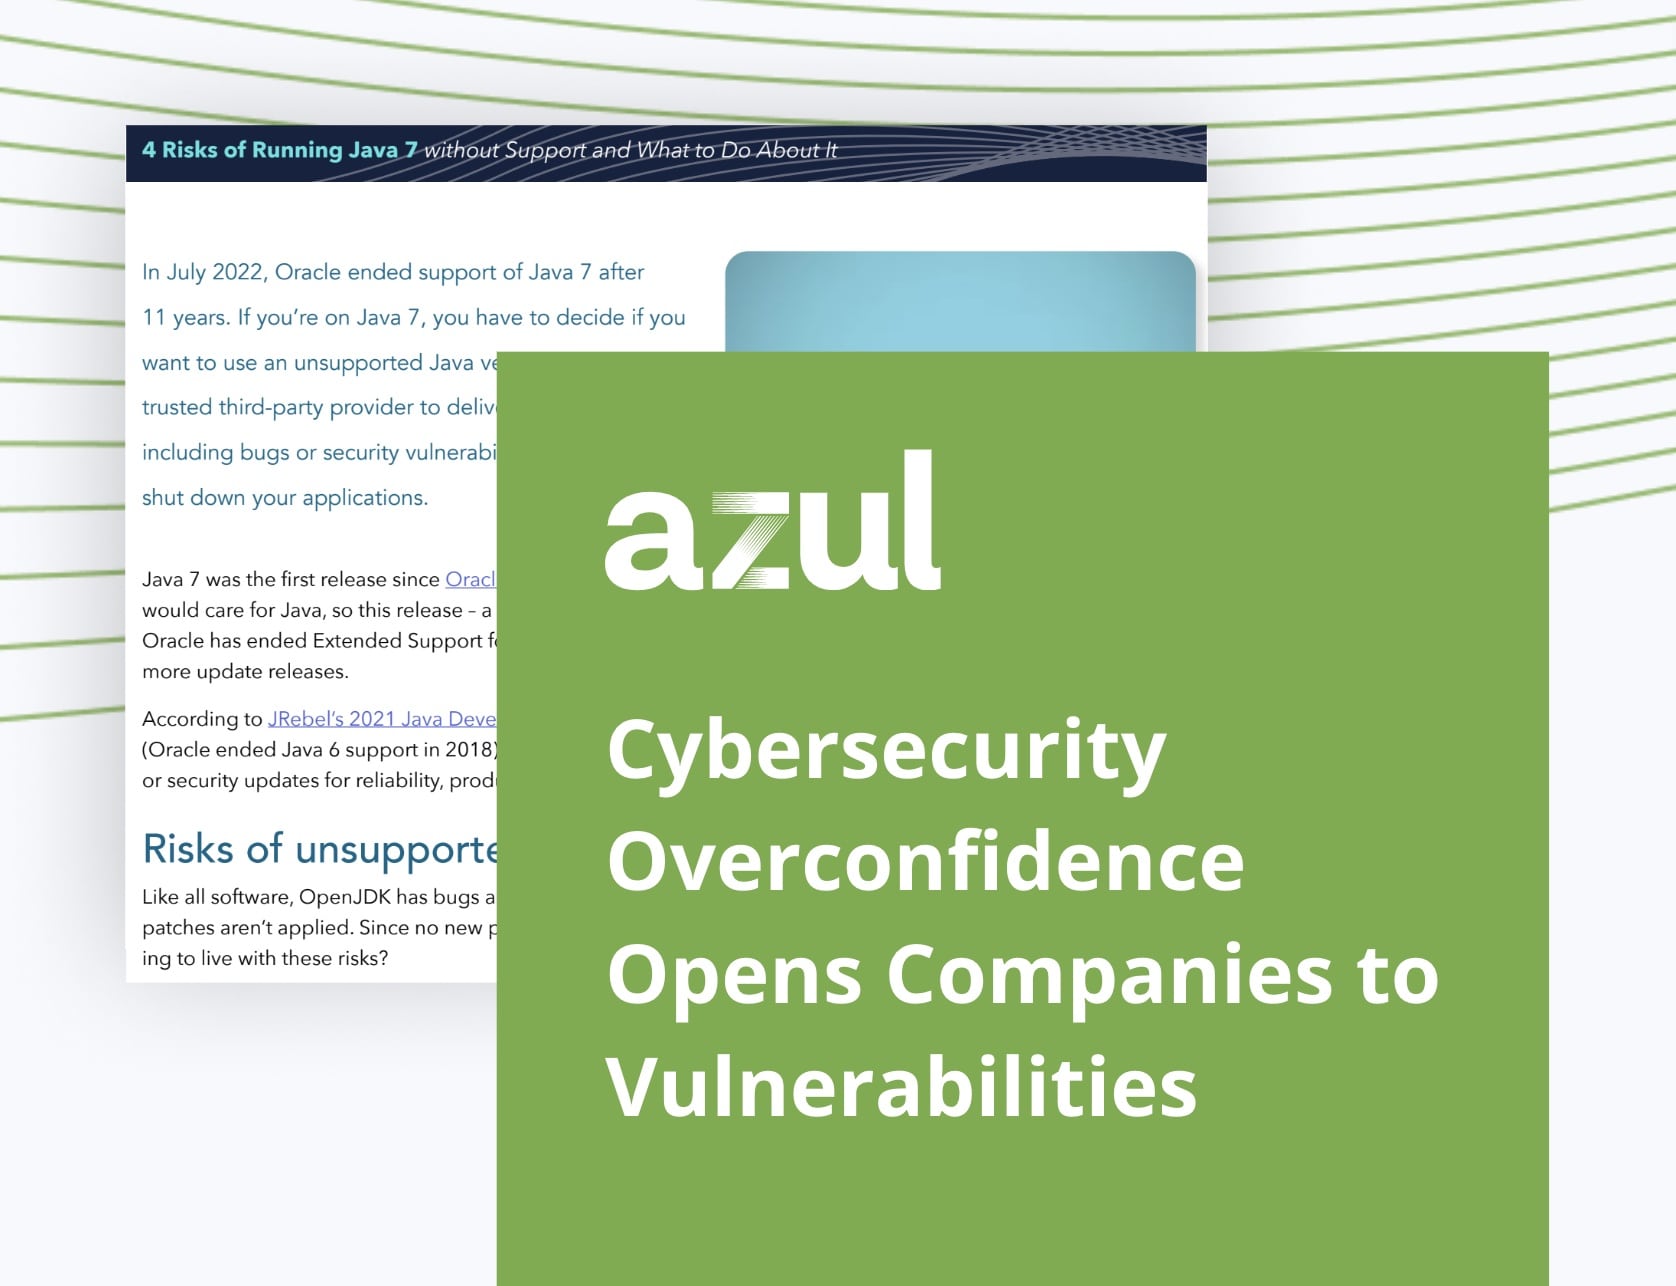 Cybersecurity Overconfidence Opens Companies to Vulnerabilities